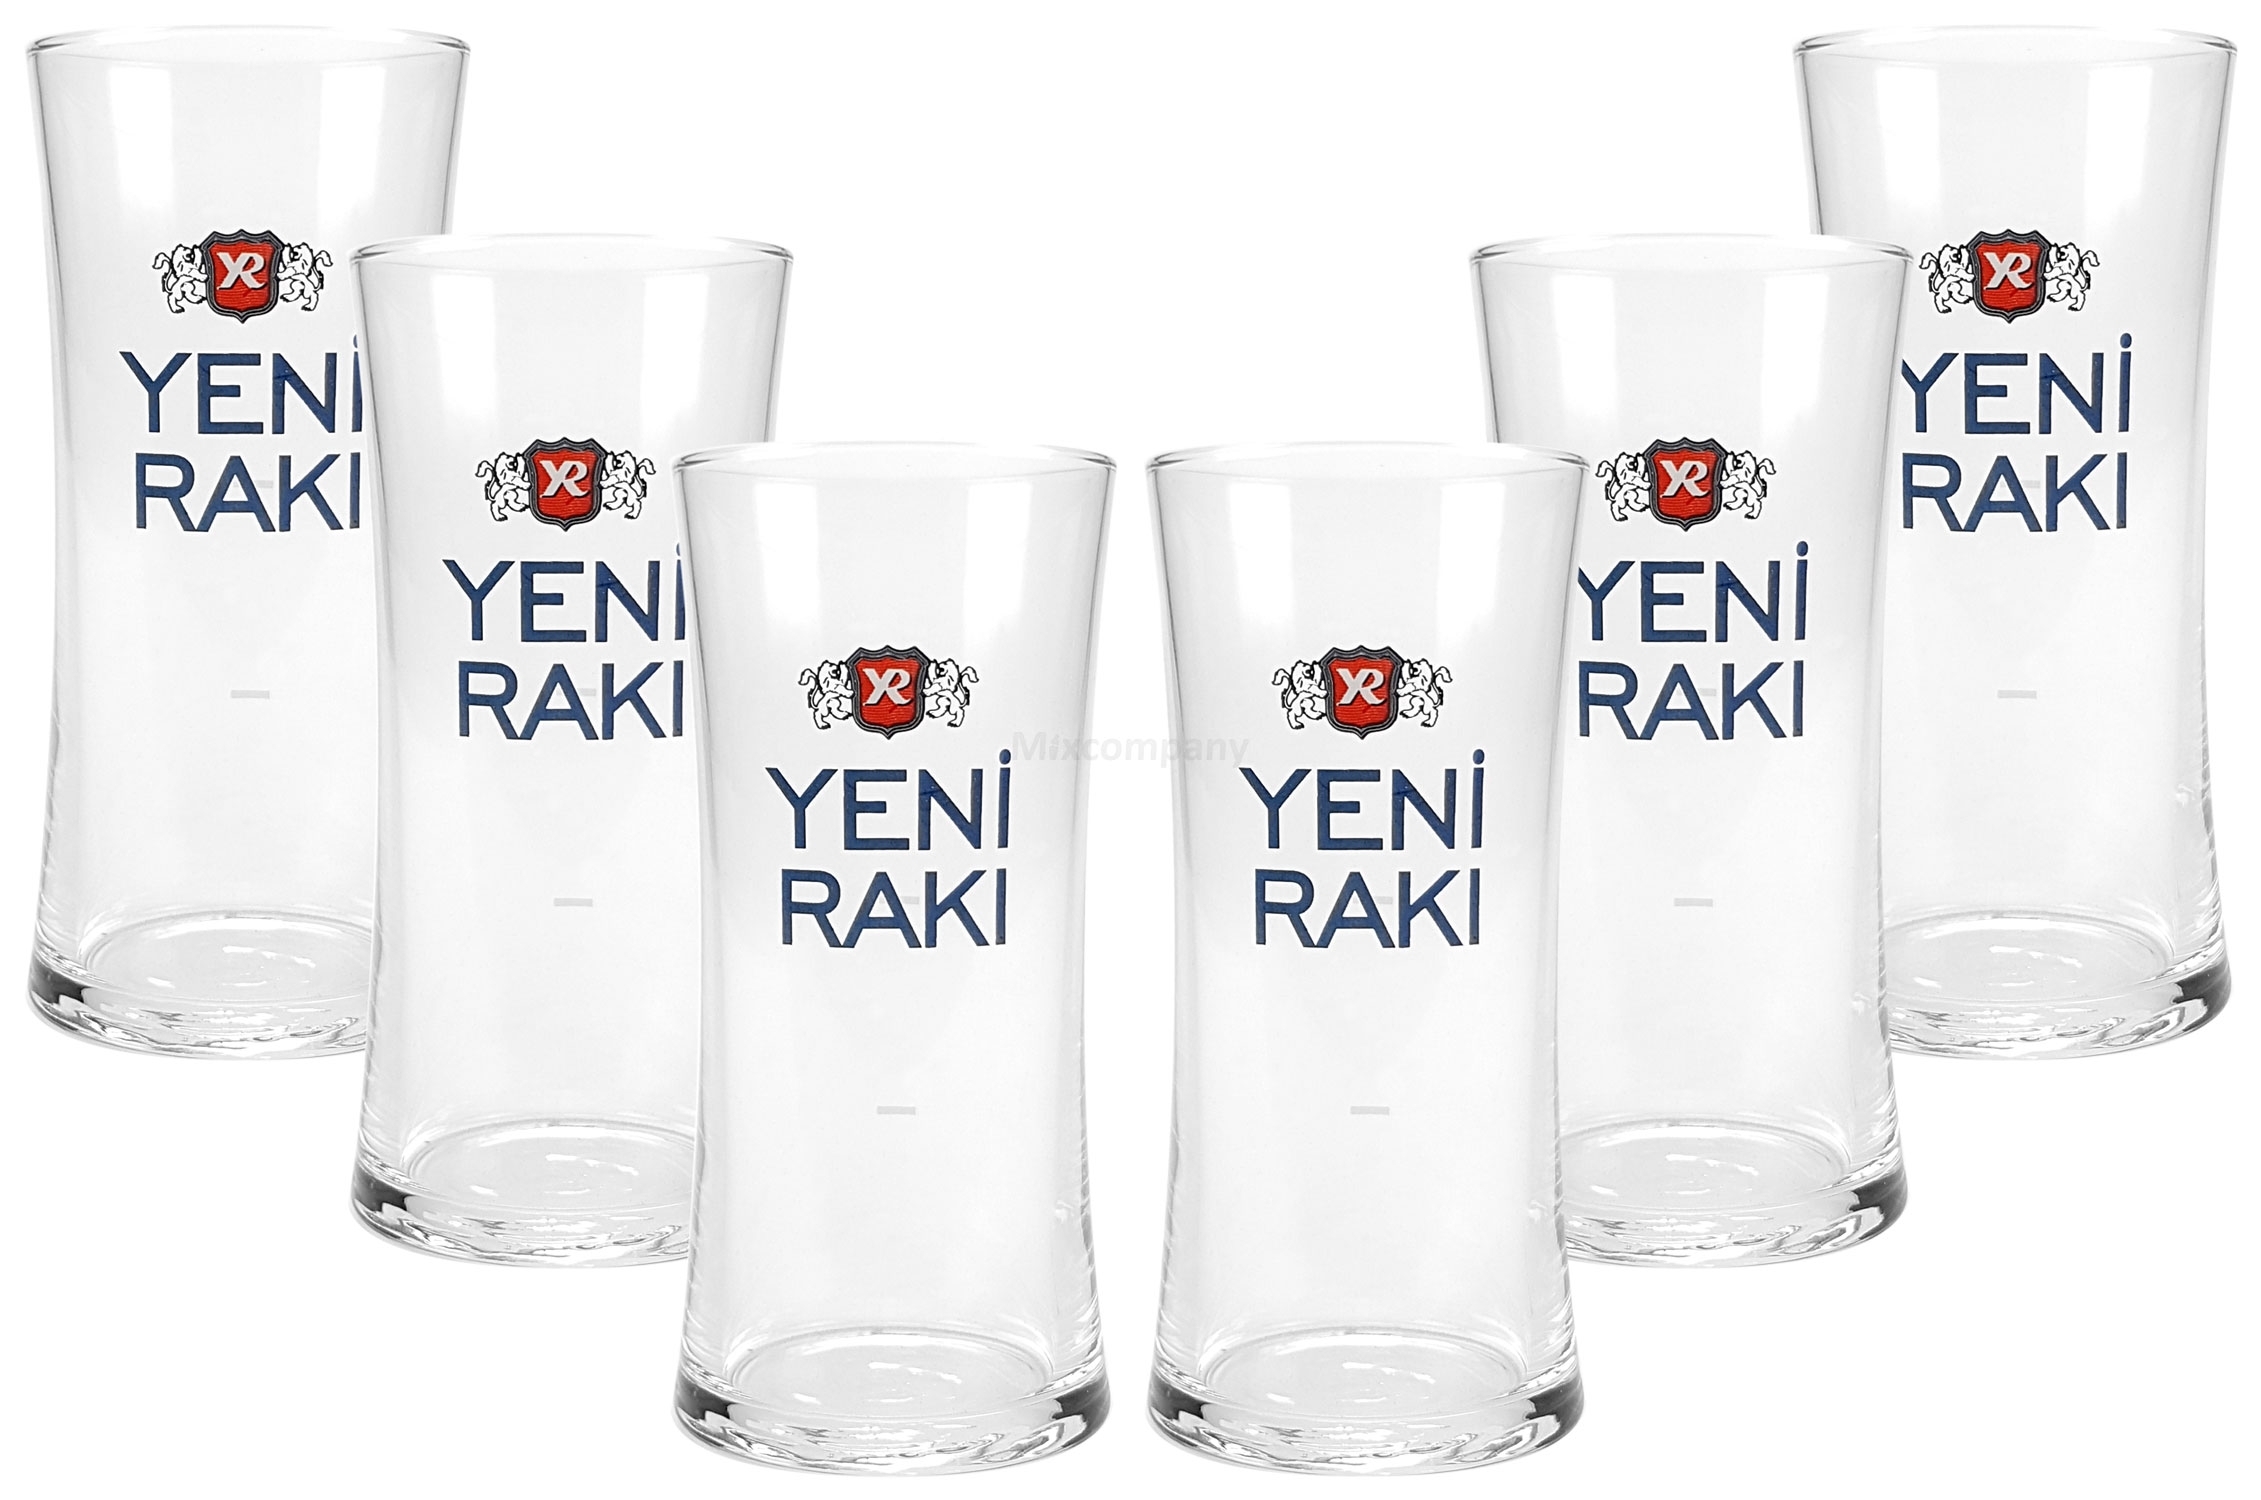 Yeni Raki Glas Gläser Set - 6x Gläser 2/4cl geeicht